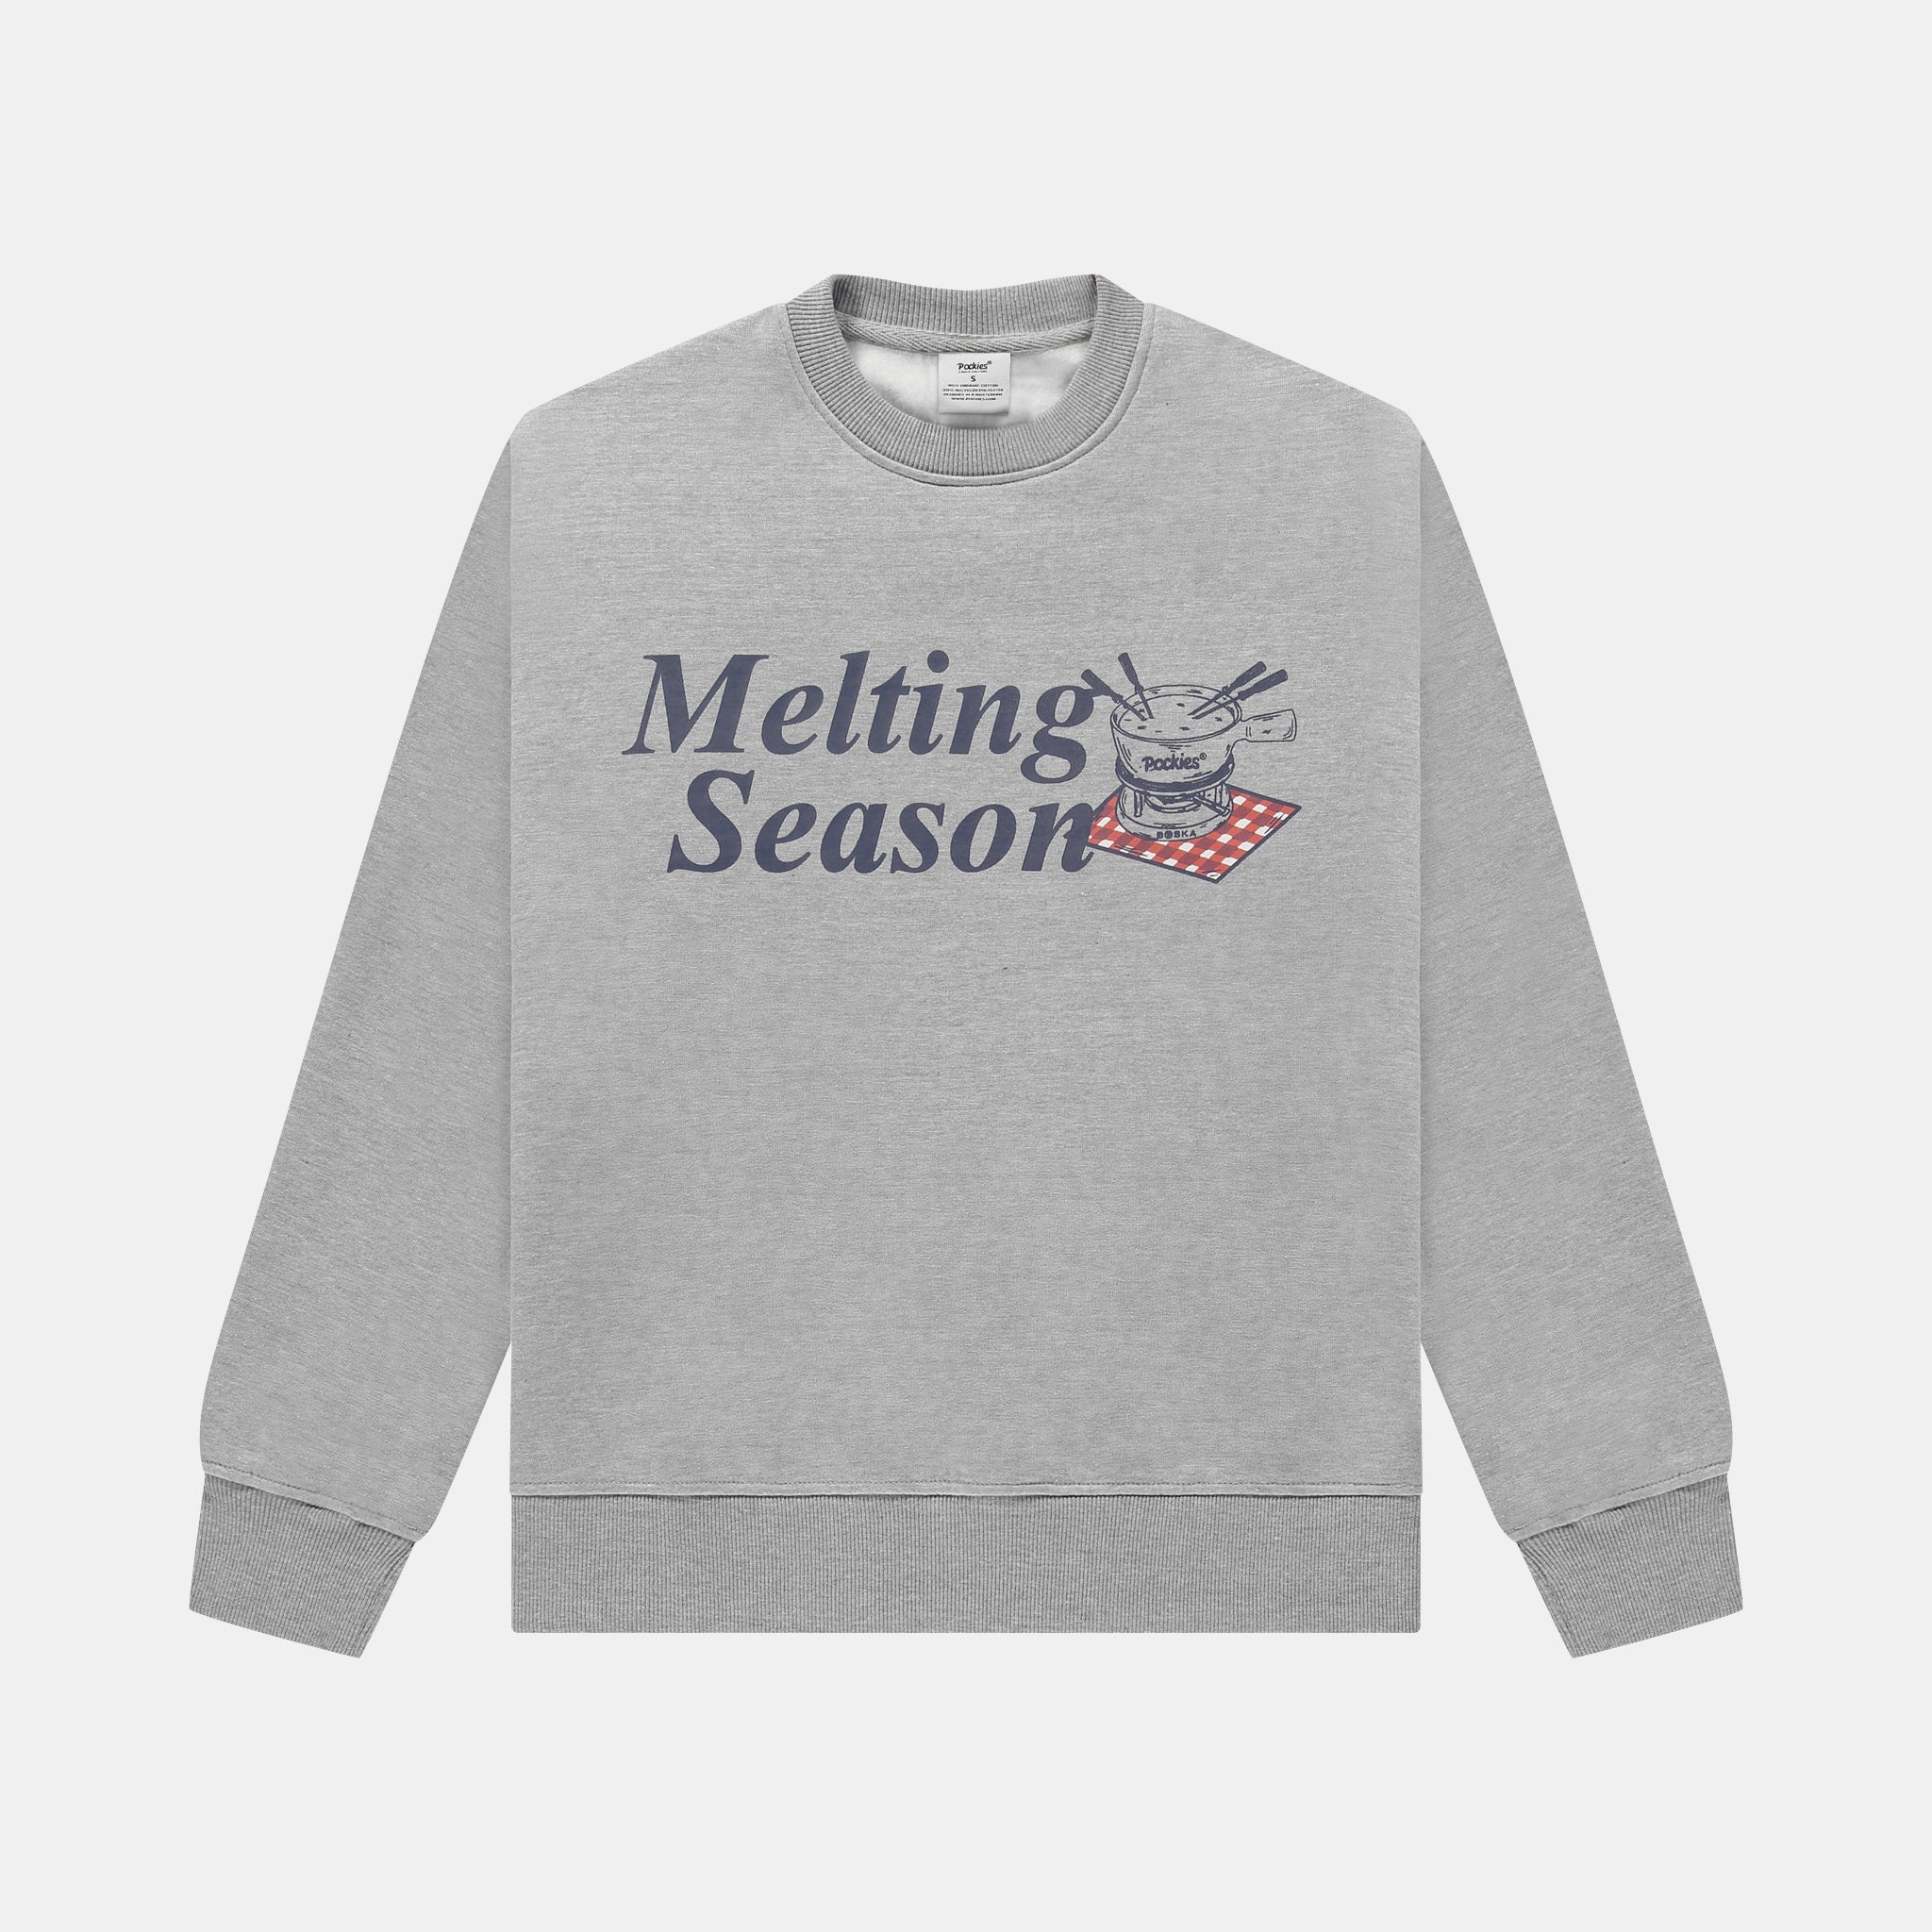 Melting season sweater